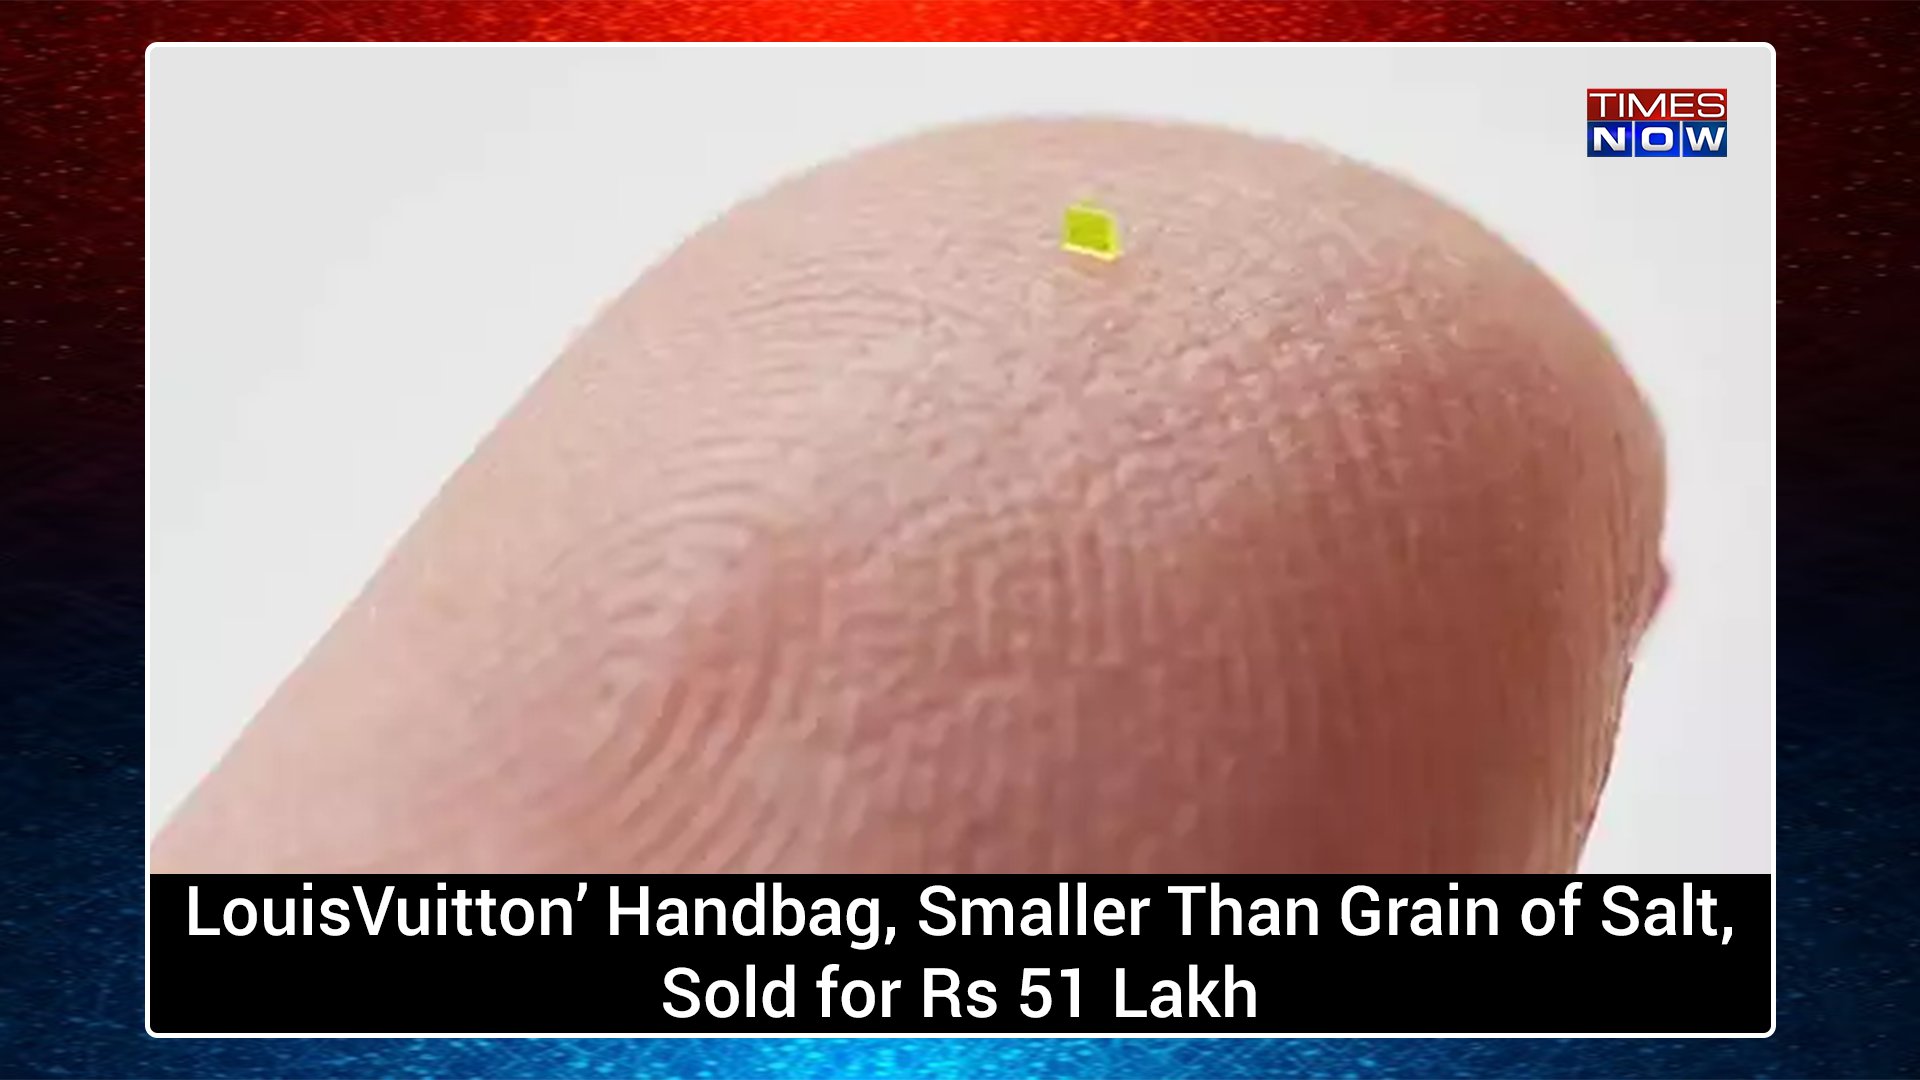 MSCHF microscopic bag 'smaller than grain of salt' sells for